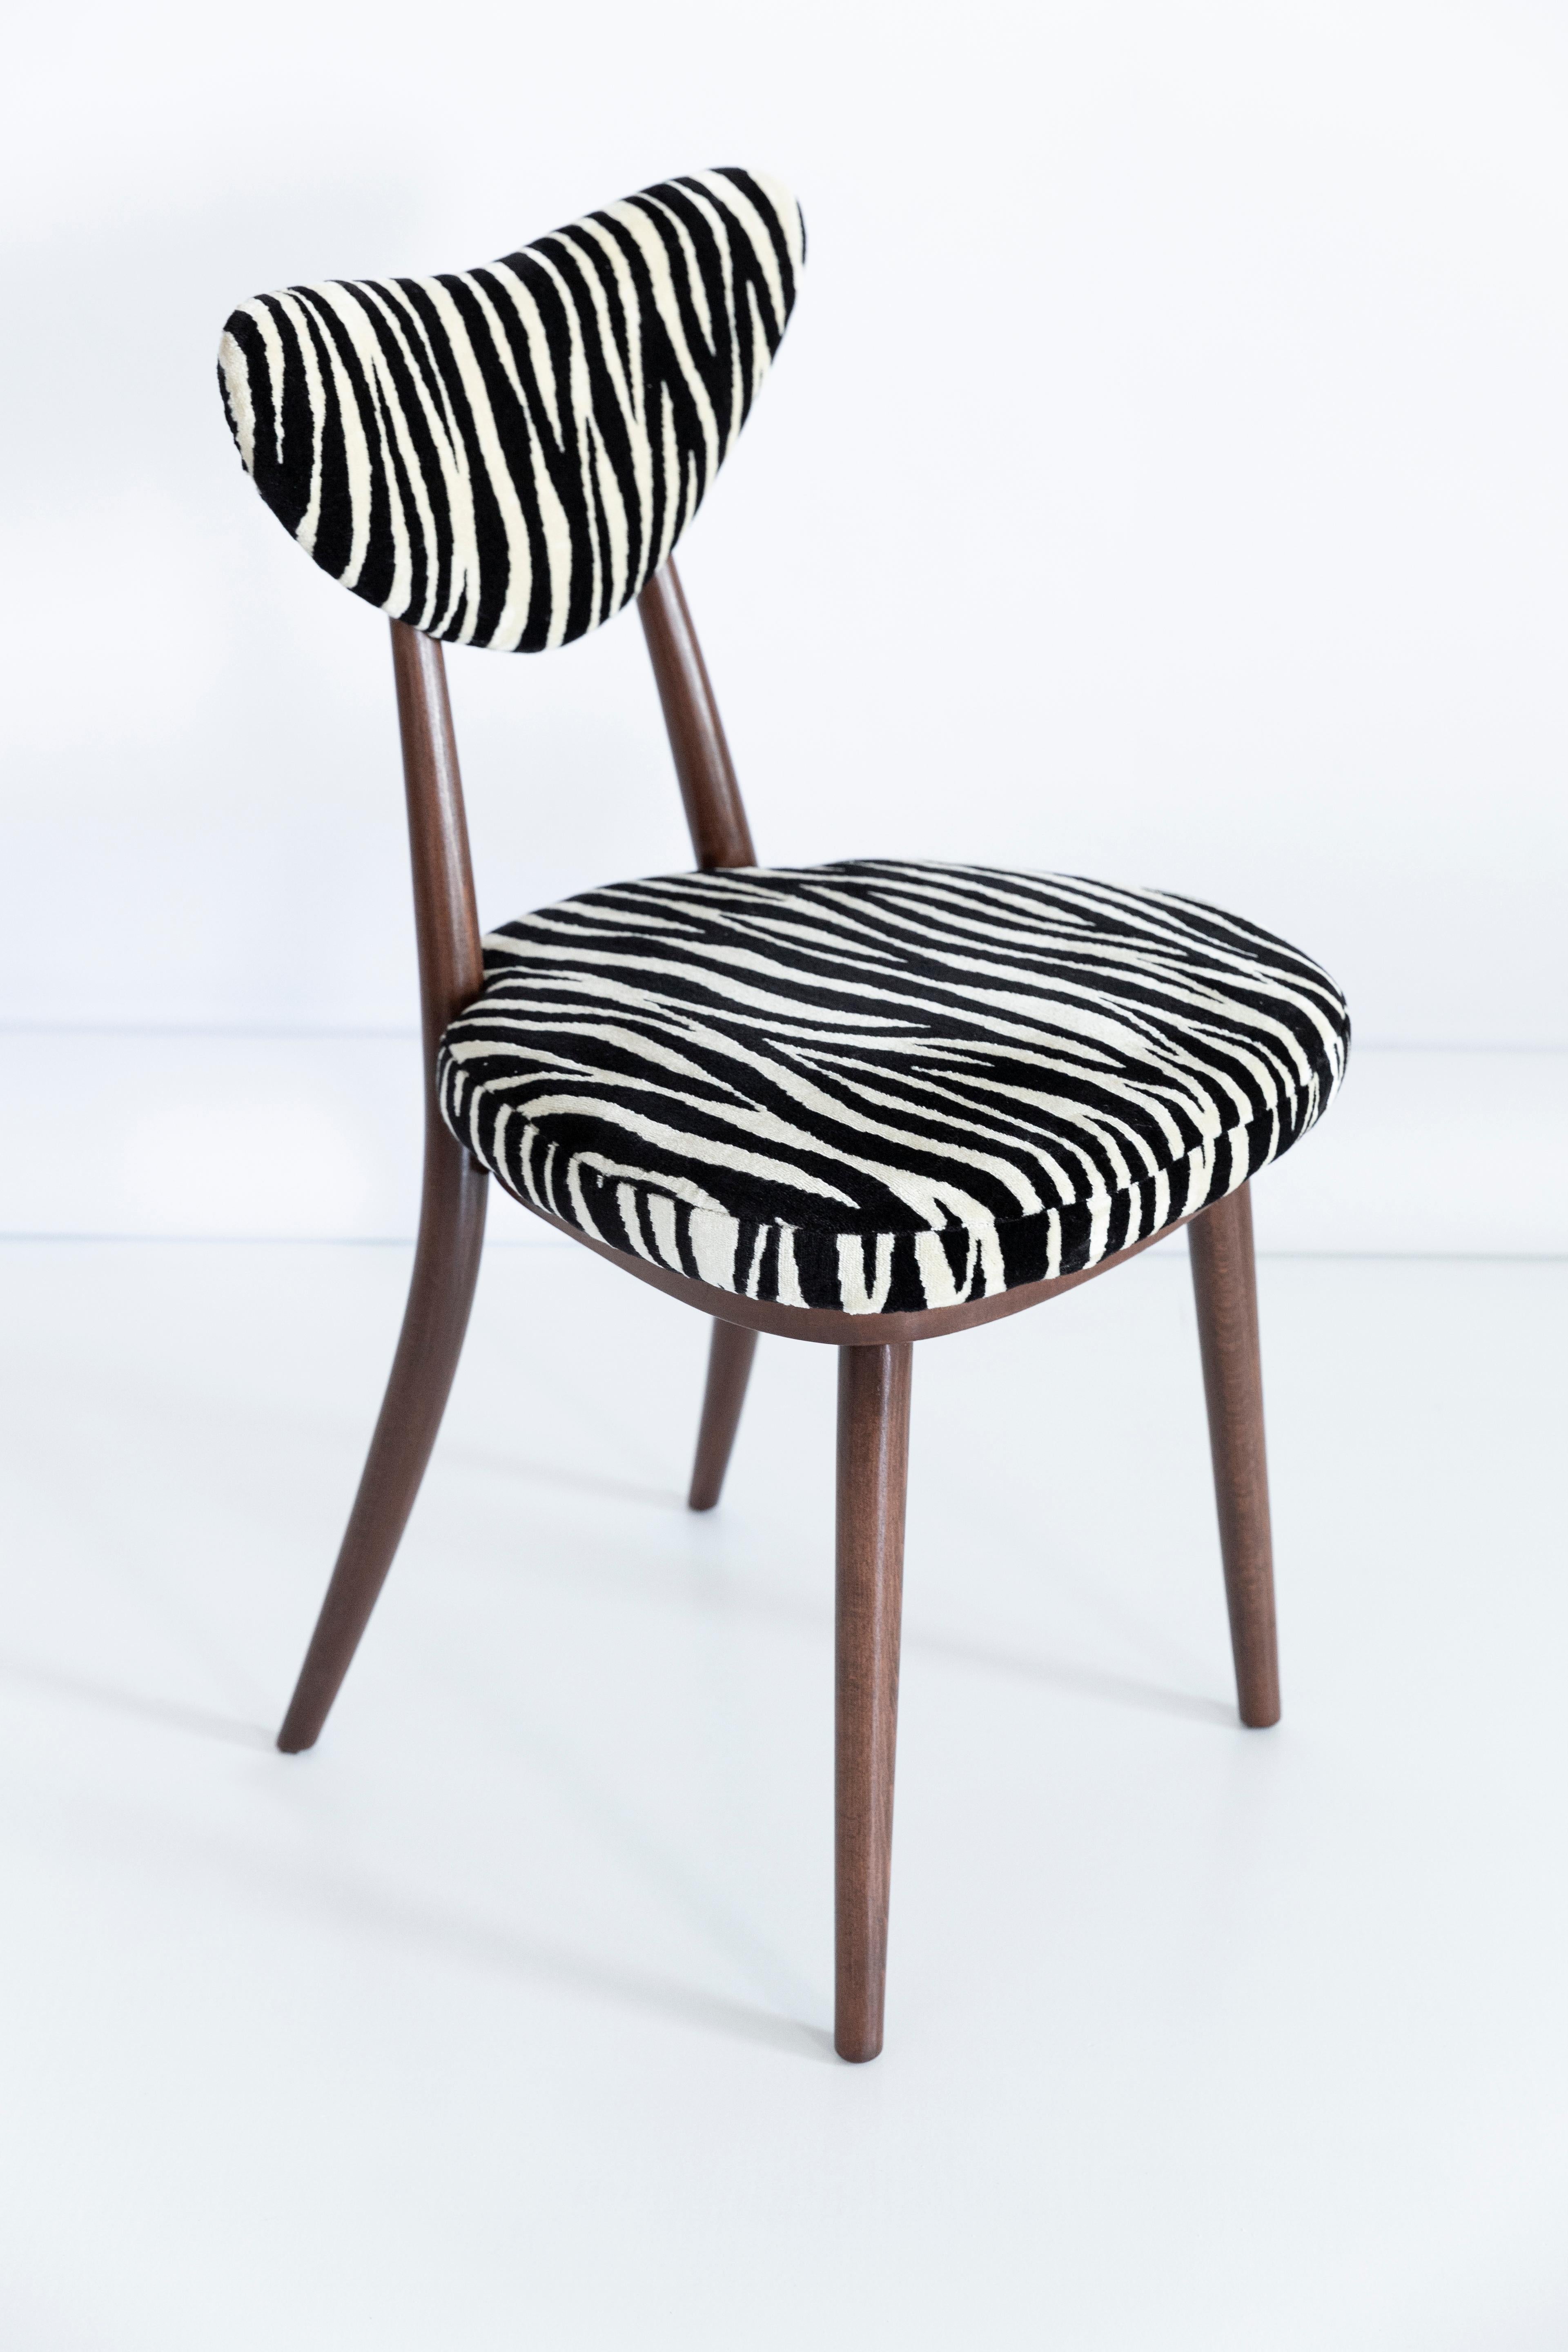 Set Midcentury Zebra Black White Heart Chairs, Hollywood Regency, Poland, 1960s For Sale 4